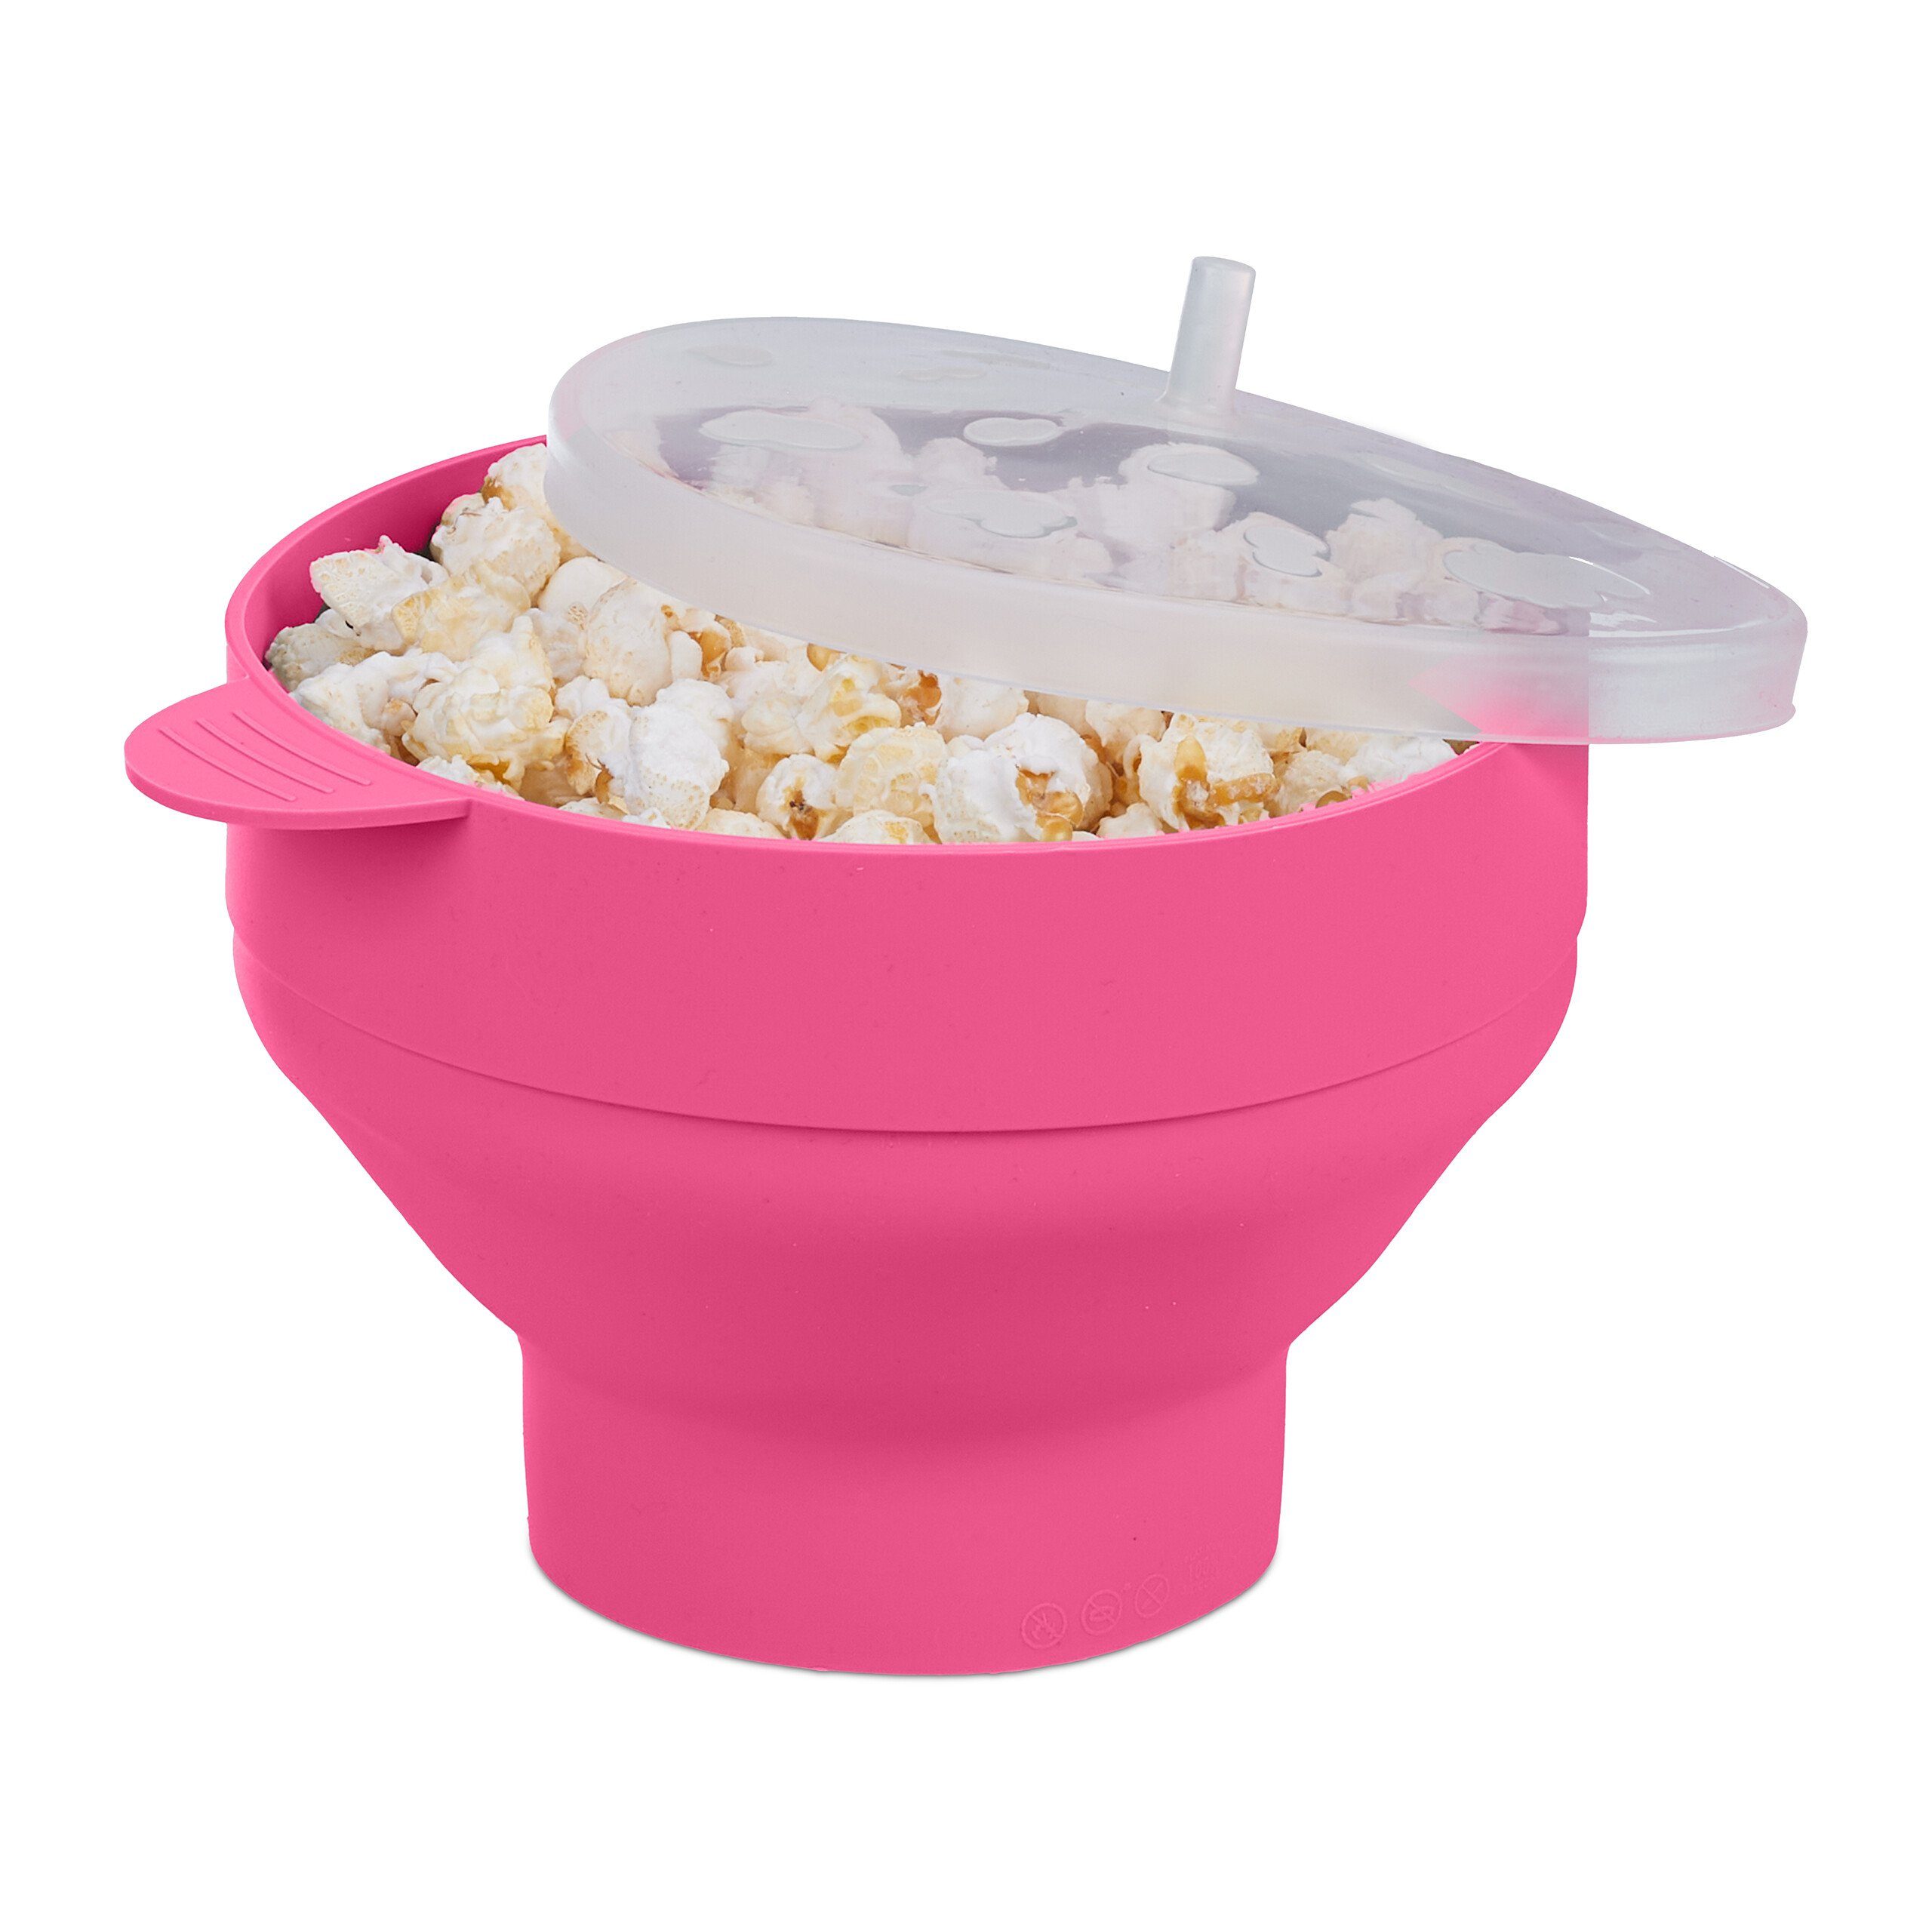 relaxdays Schüssel Popcorn Maker für Mikrowelle, Silikon, Pink Pink Transparent